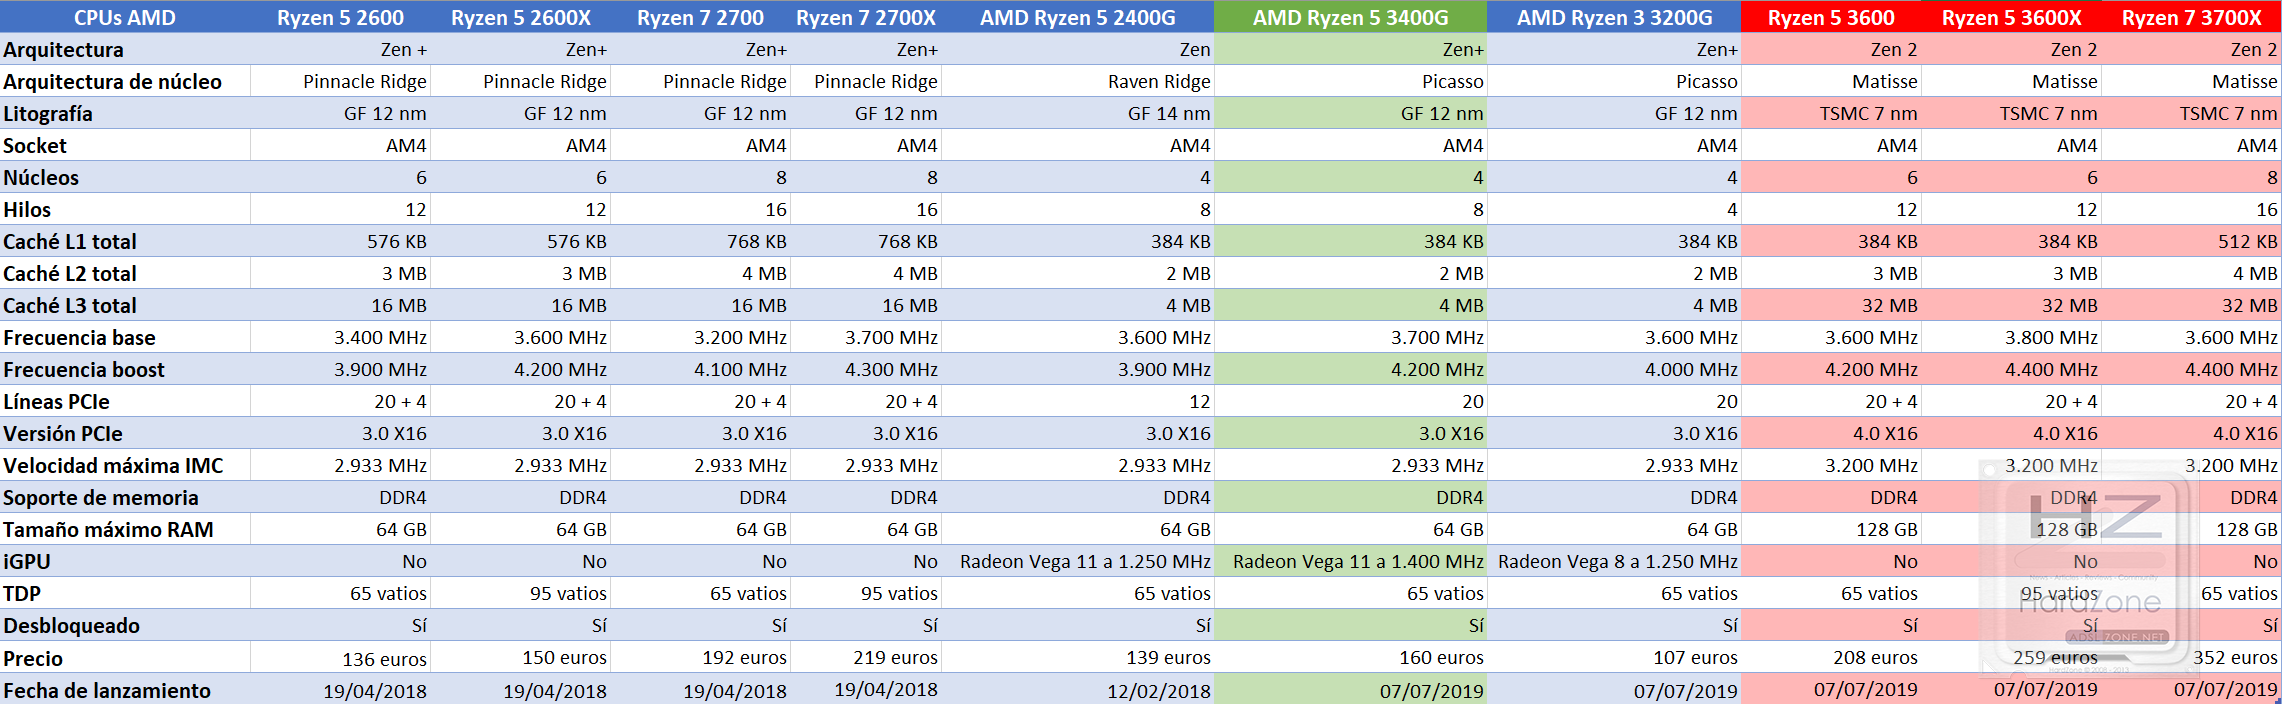 Review AMD Ryzen 5 3400G tabla